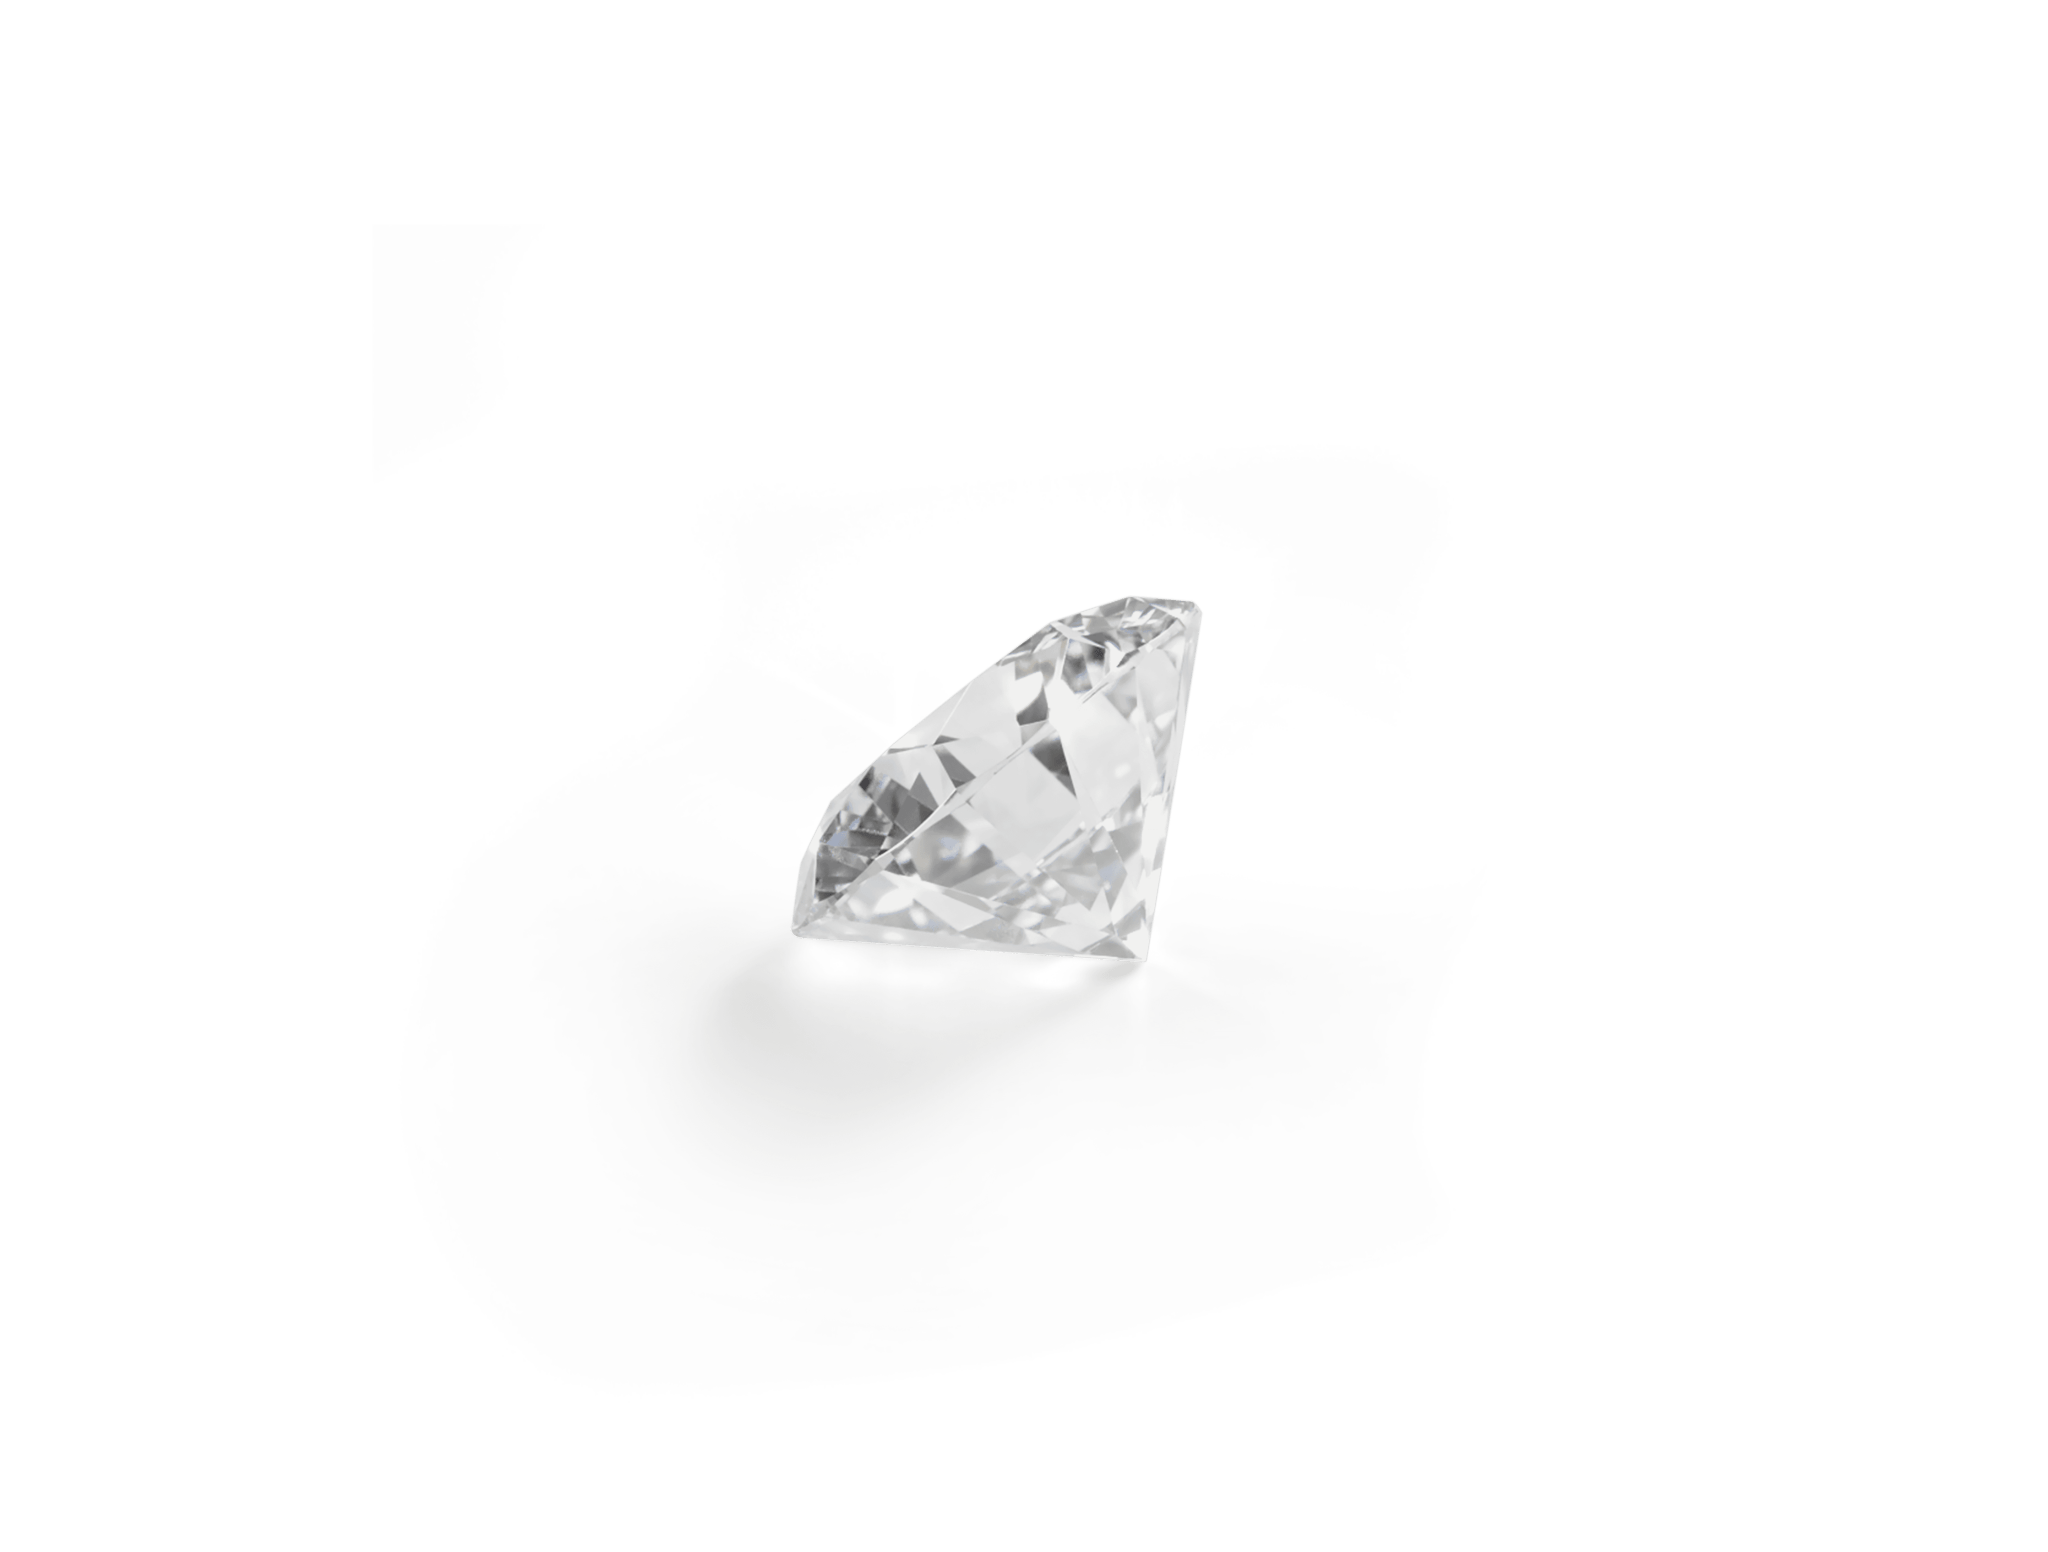 Basics Lab-Grown Loose 1¾ct. Round Brilliant Diamond | White - #Lightbox Jewelry#